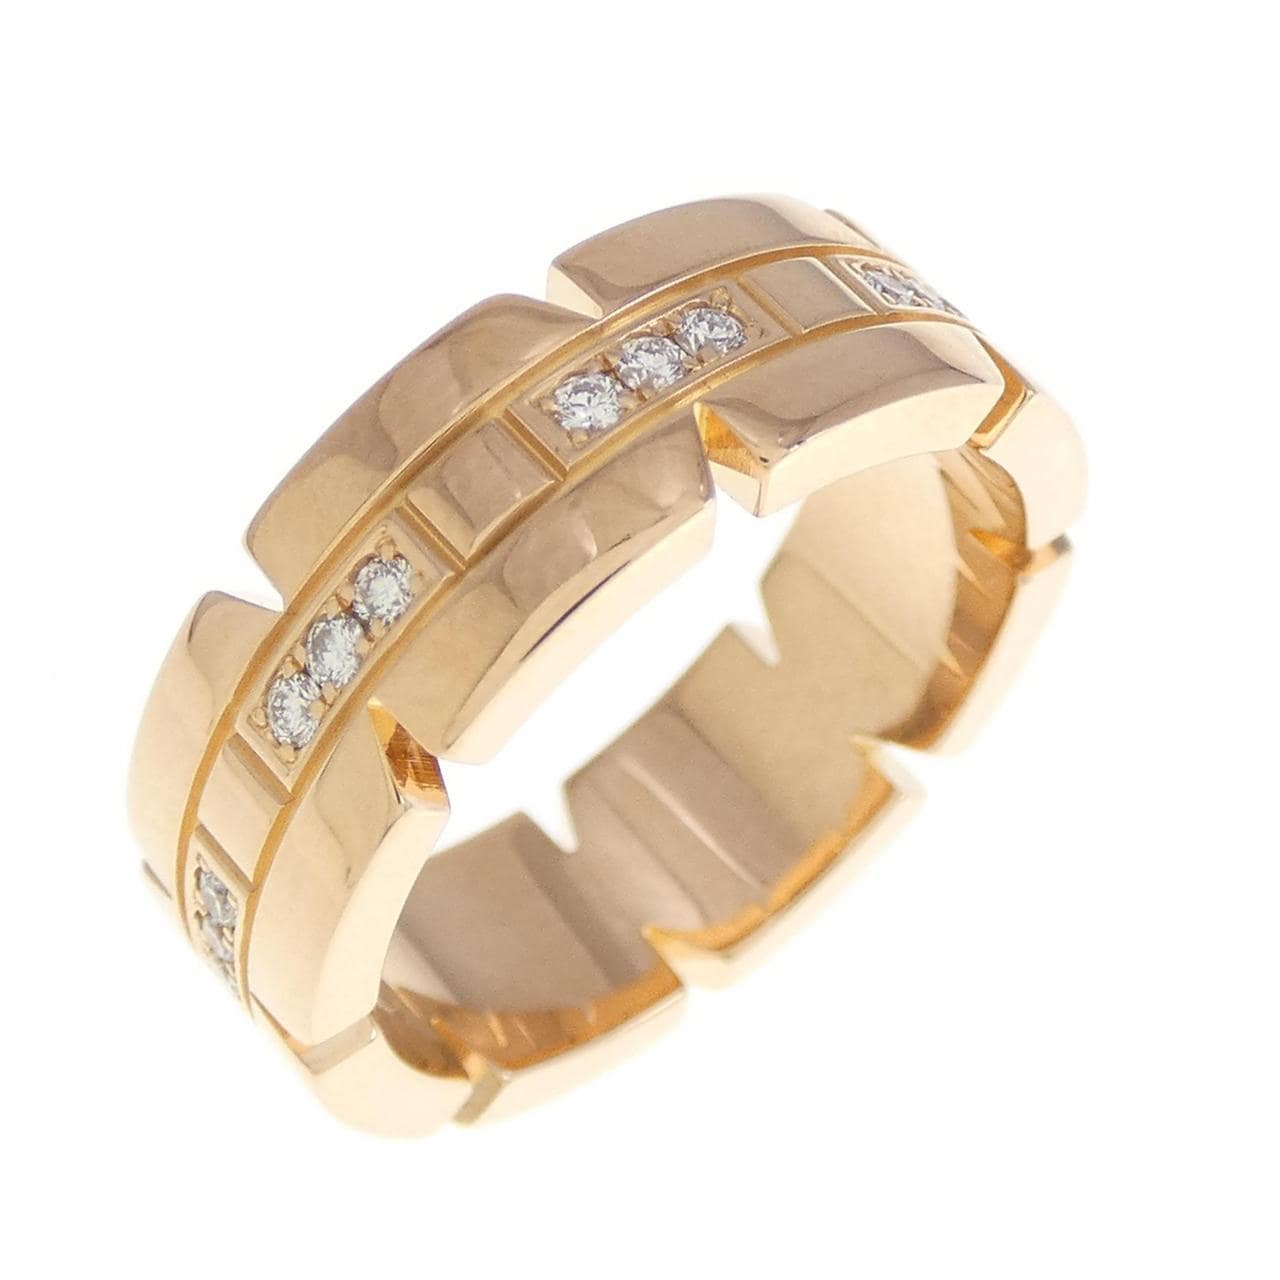 Cartier Tank Française half diamond Ring